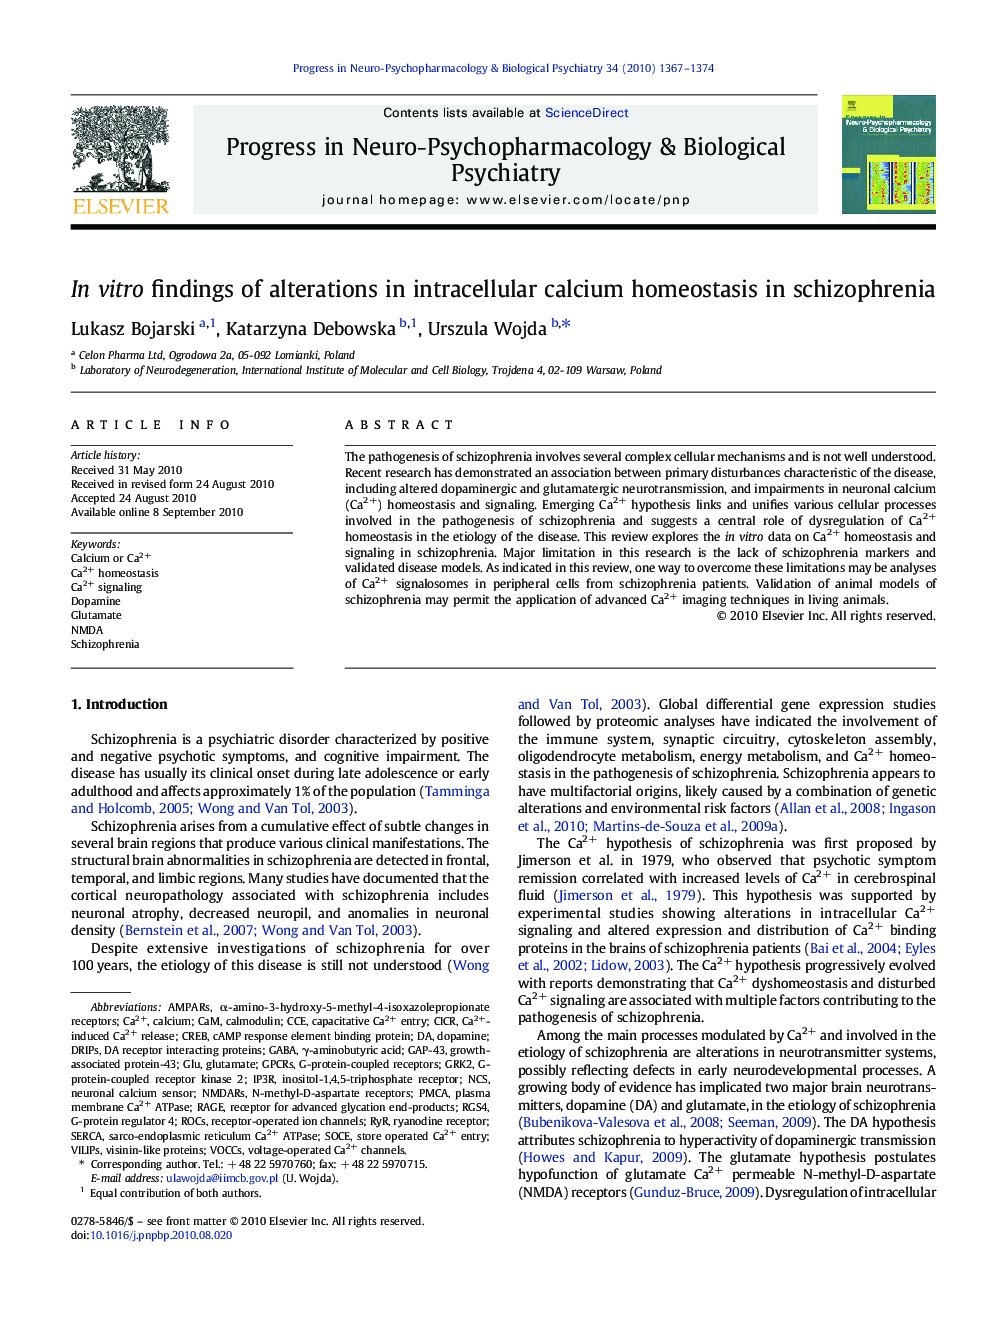 In vitro findings of alterations in intracellular calcium homeostasis in schizophrenia